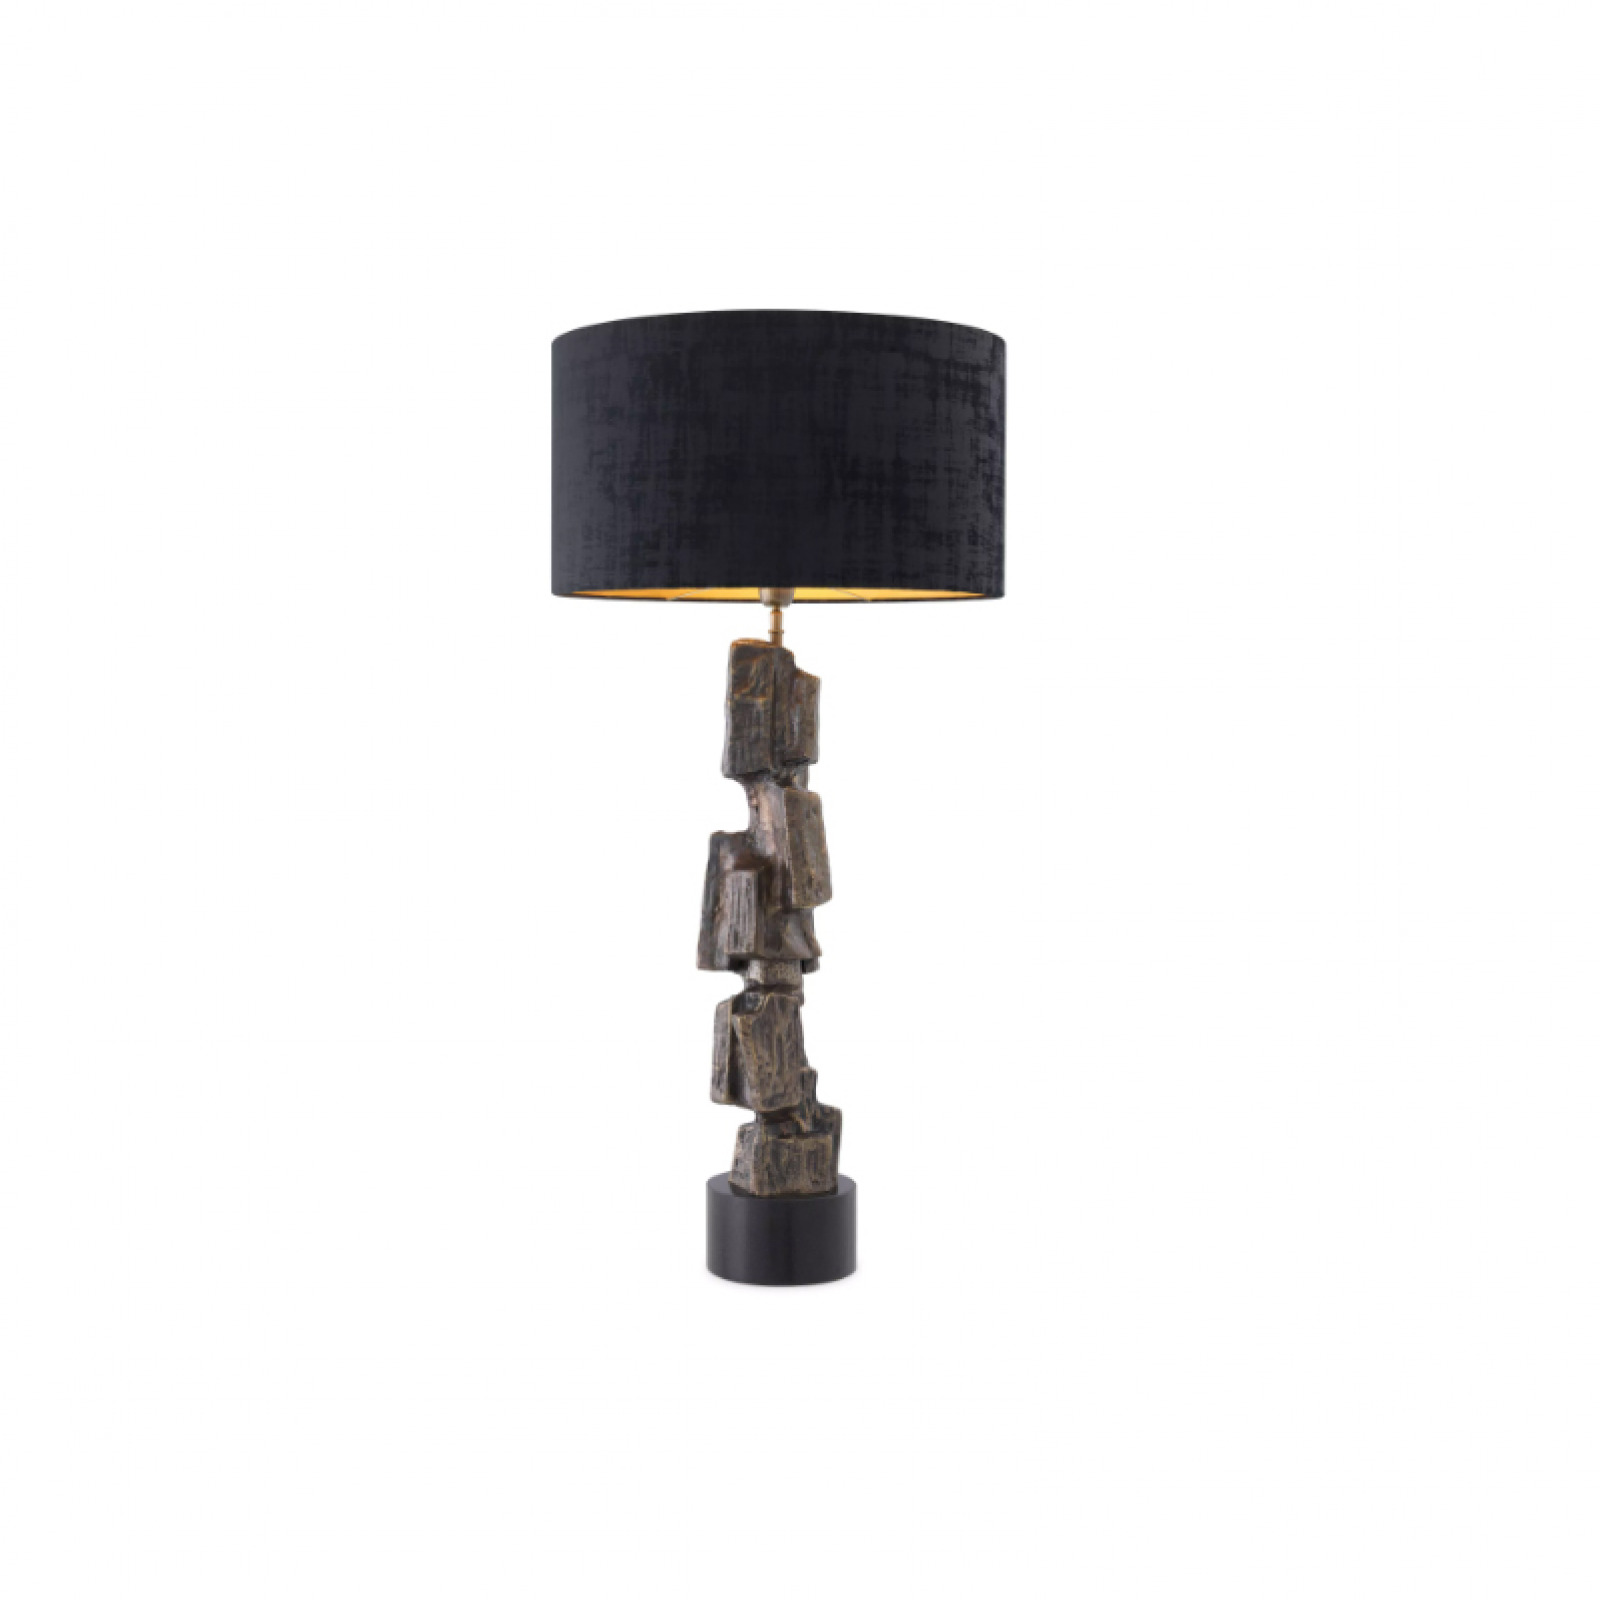 Noto table lamp